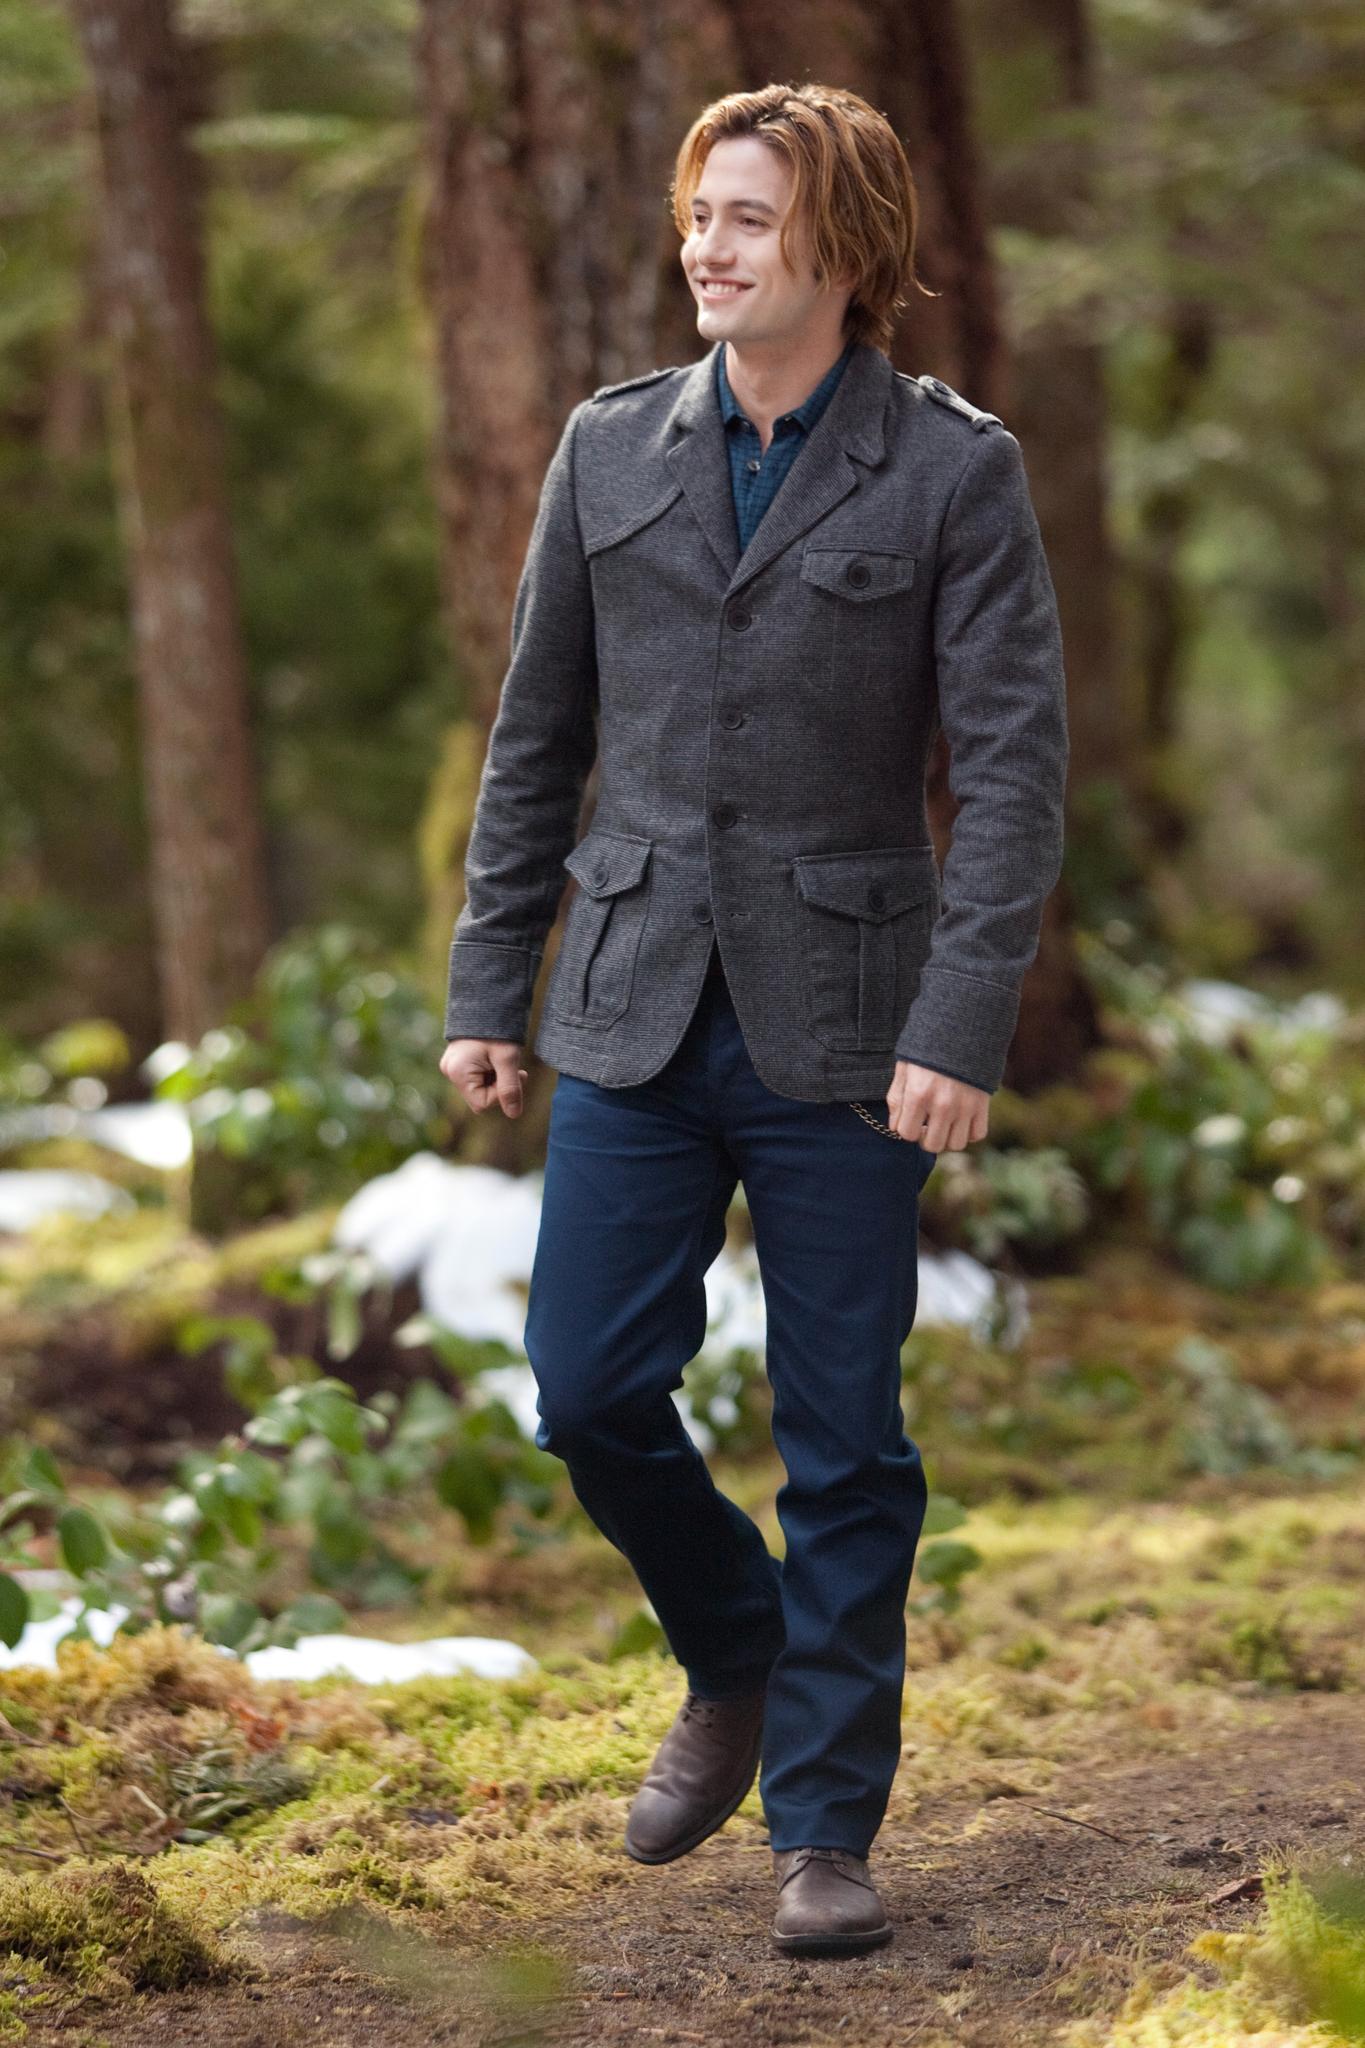 Jackson Rathbone in The Twilight Saga: Breaking Dawn - Part 2